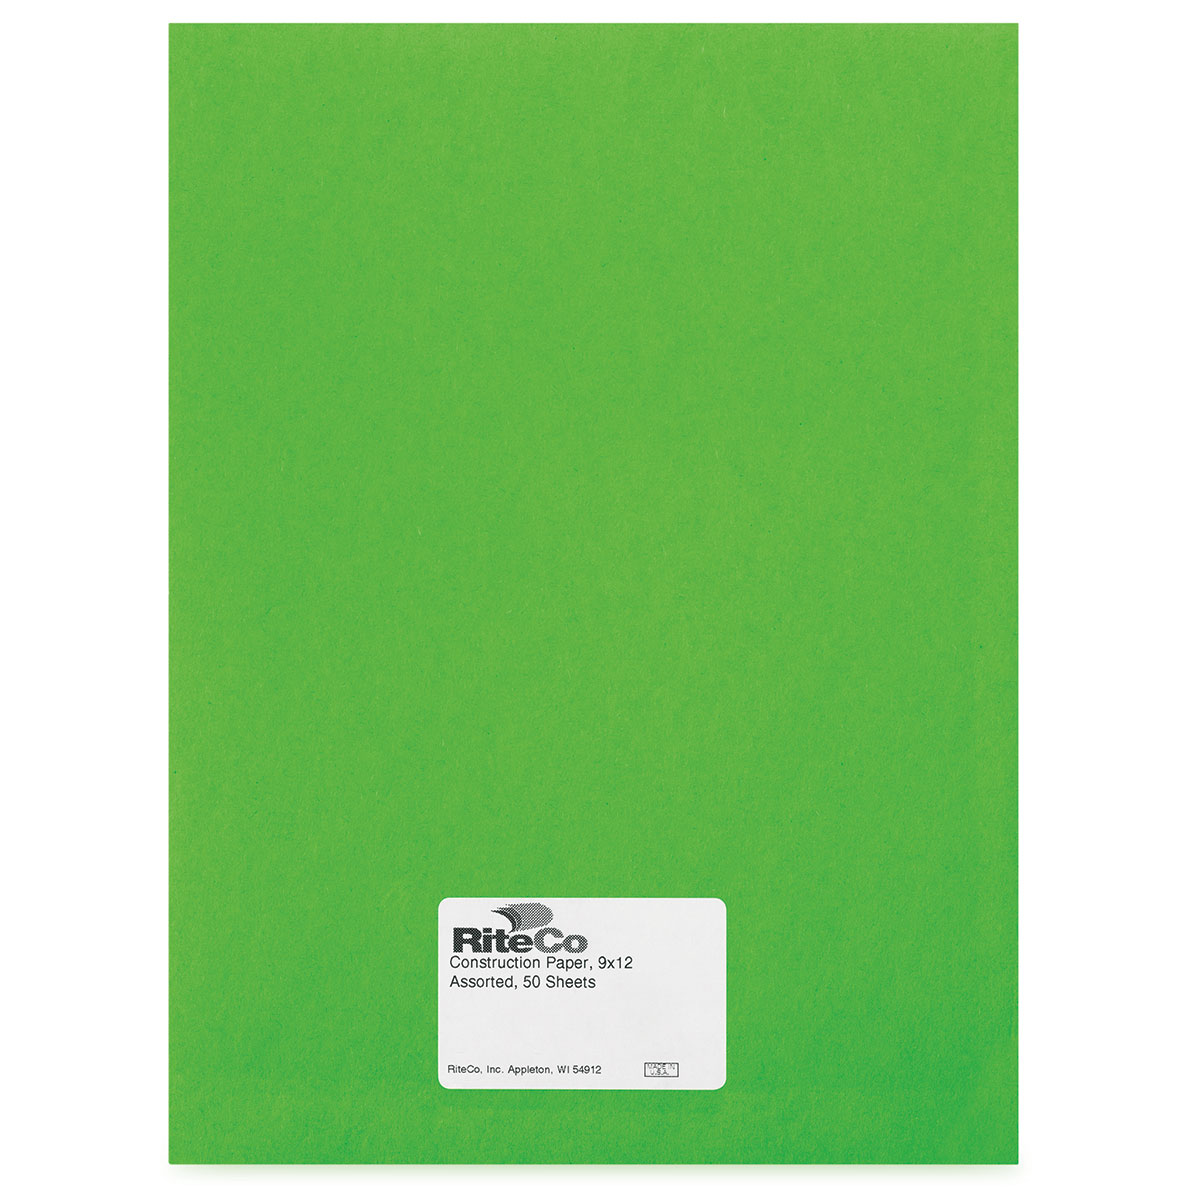 Riteco Construction Paper - Light Green, 9 x 12, 50 Sheets